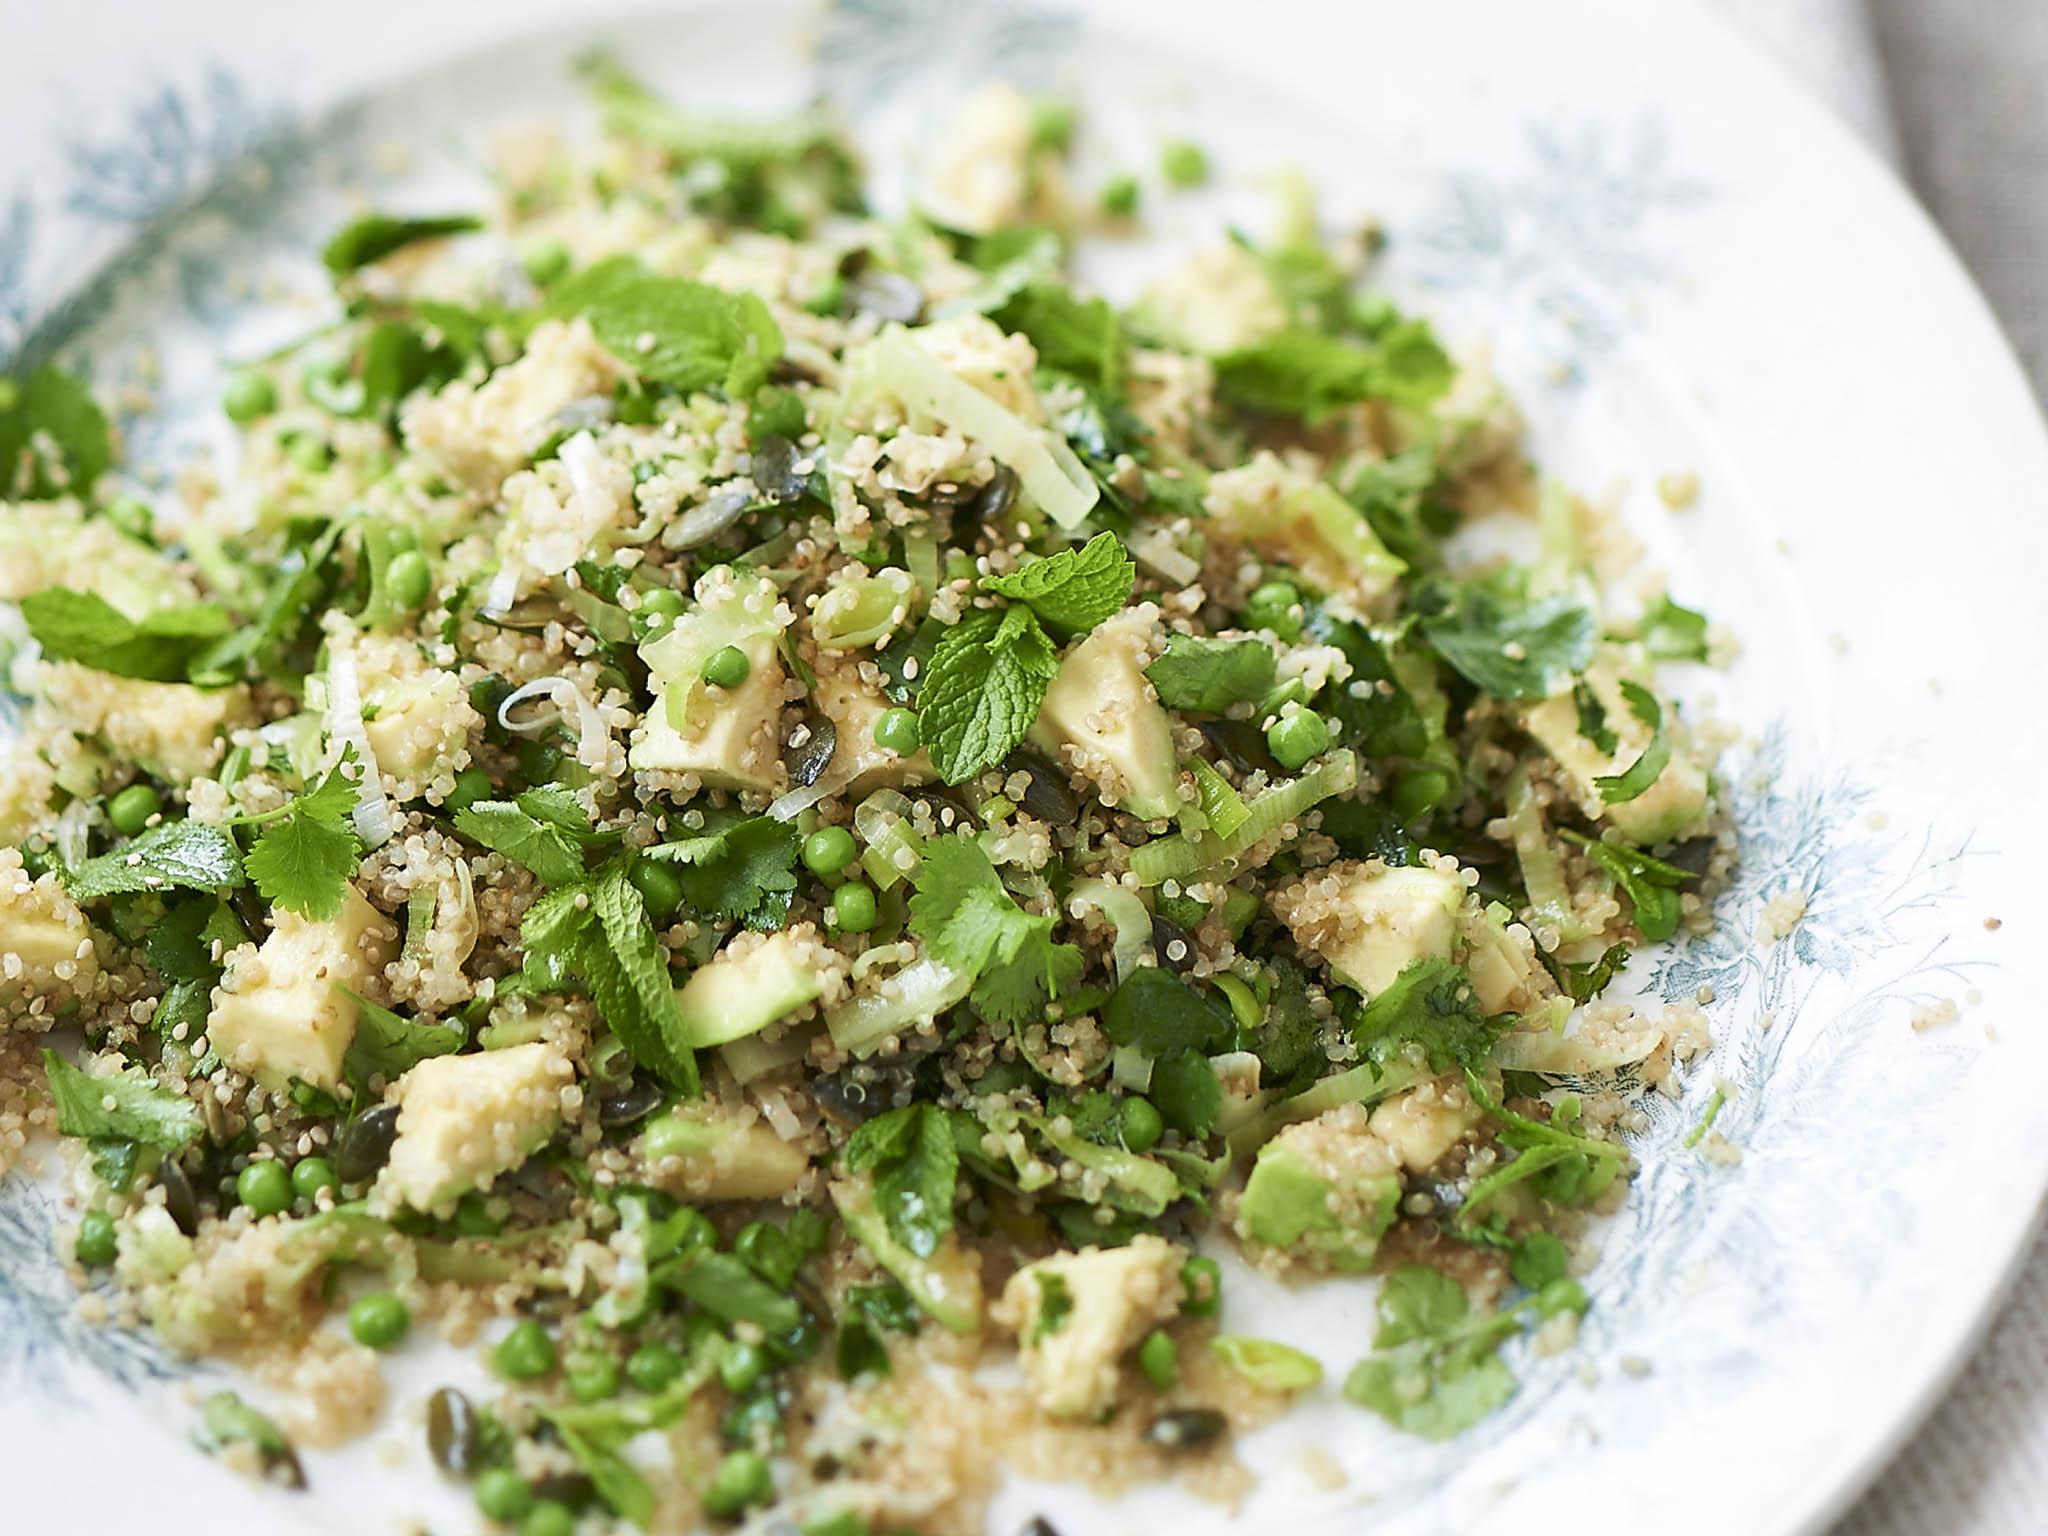 How to make quinoa with sauteed leeks, peas and avocado | The ...